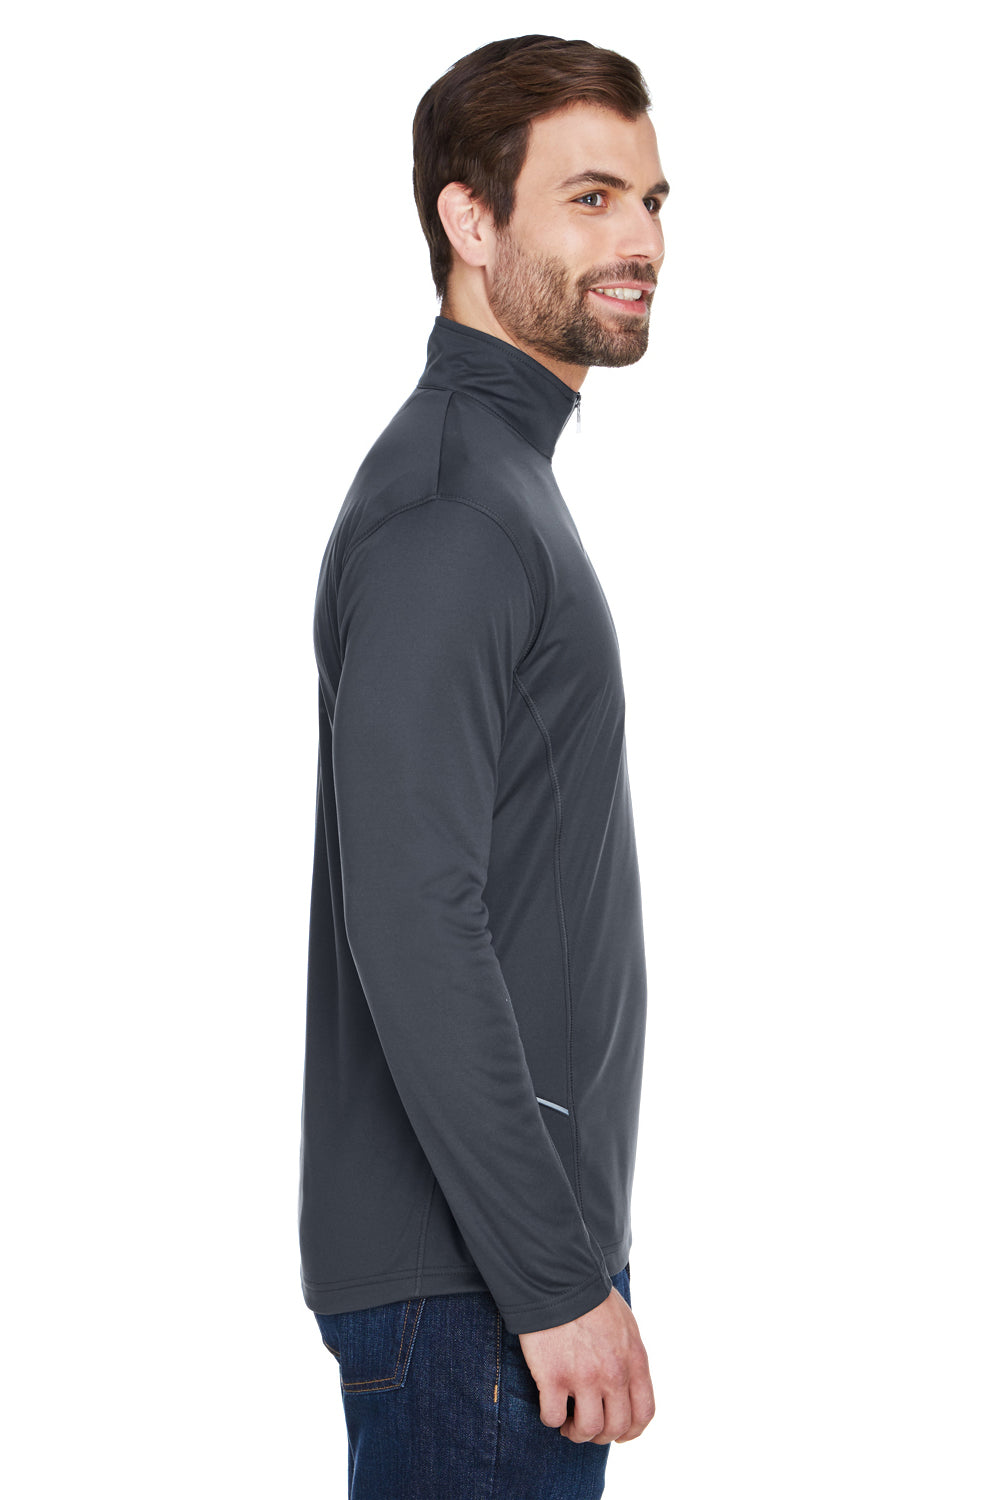 UltraClub 8230 Mens Cool & Dry Moisture Wicking 1/4 Zip Sweatshirt Black Side